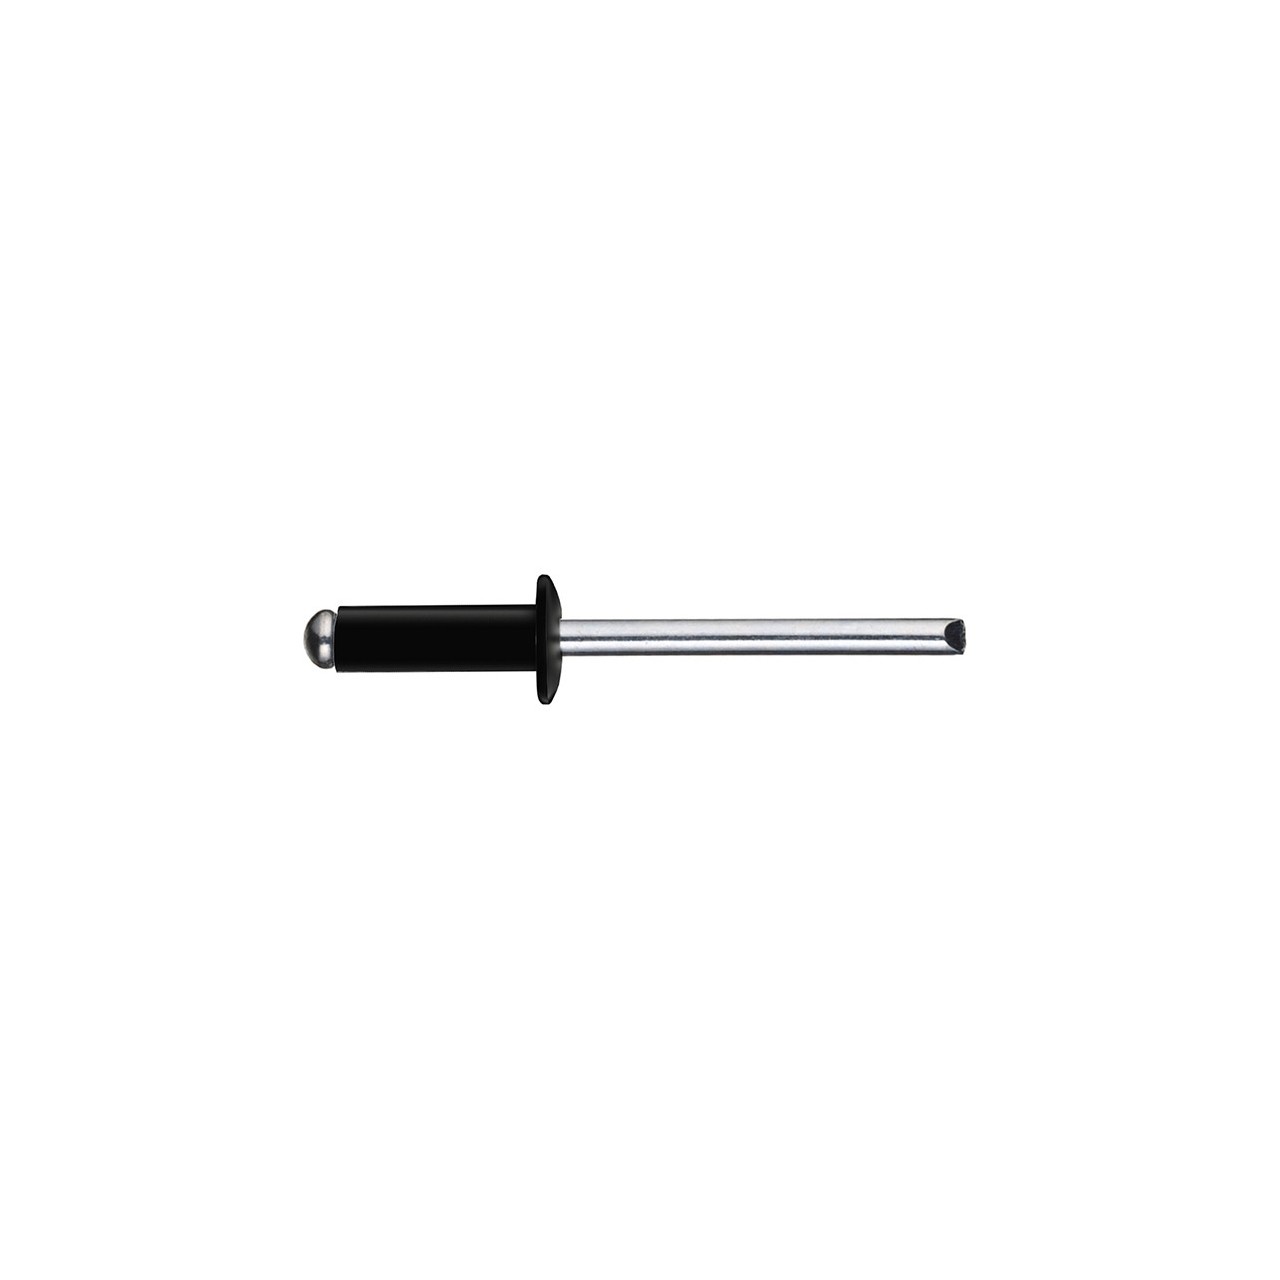 Remache tubular DIN-7337 estándar aluminio negro (Caja)